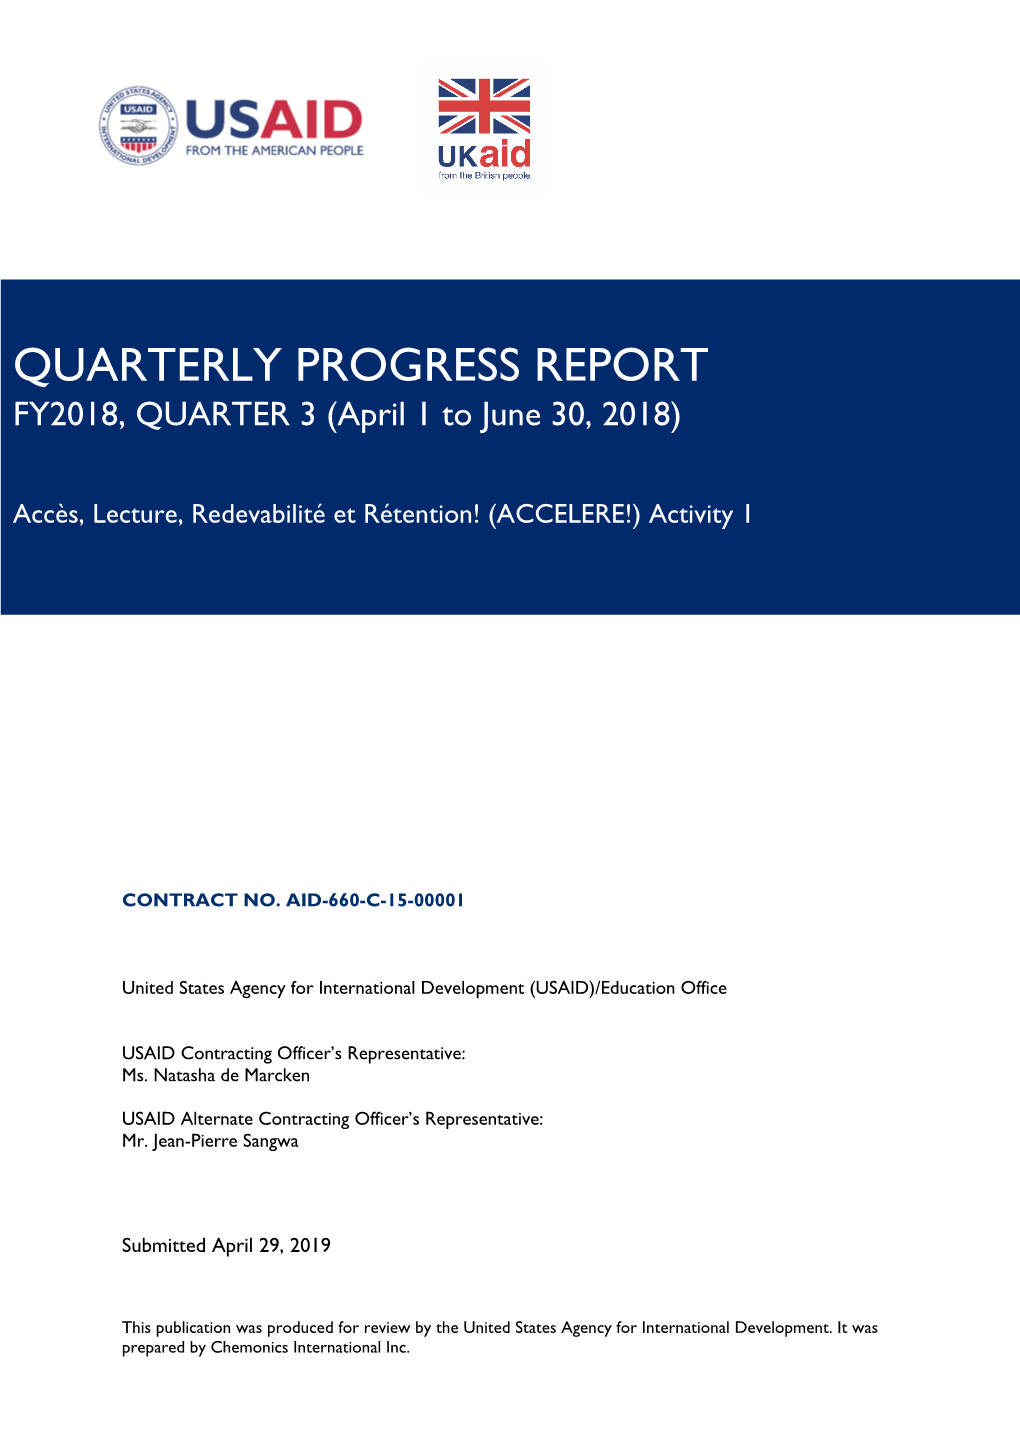 QUARTERLY PROGRESS REPORT FY2018, QUARTER 3 (April 1 to June 30, 2018)